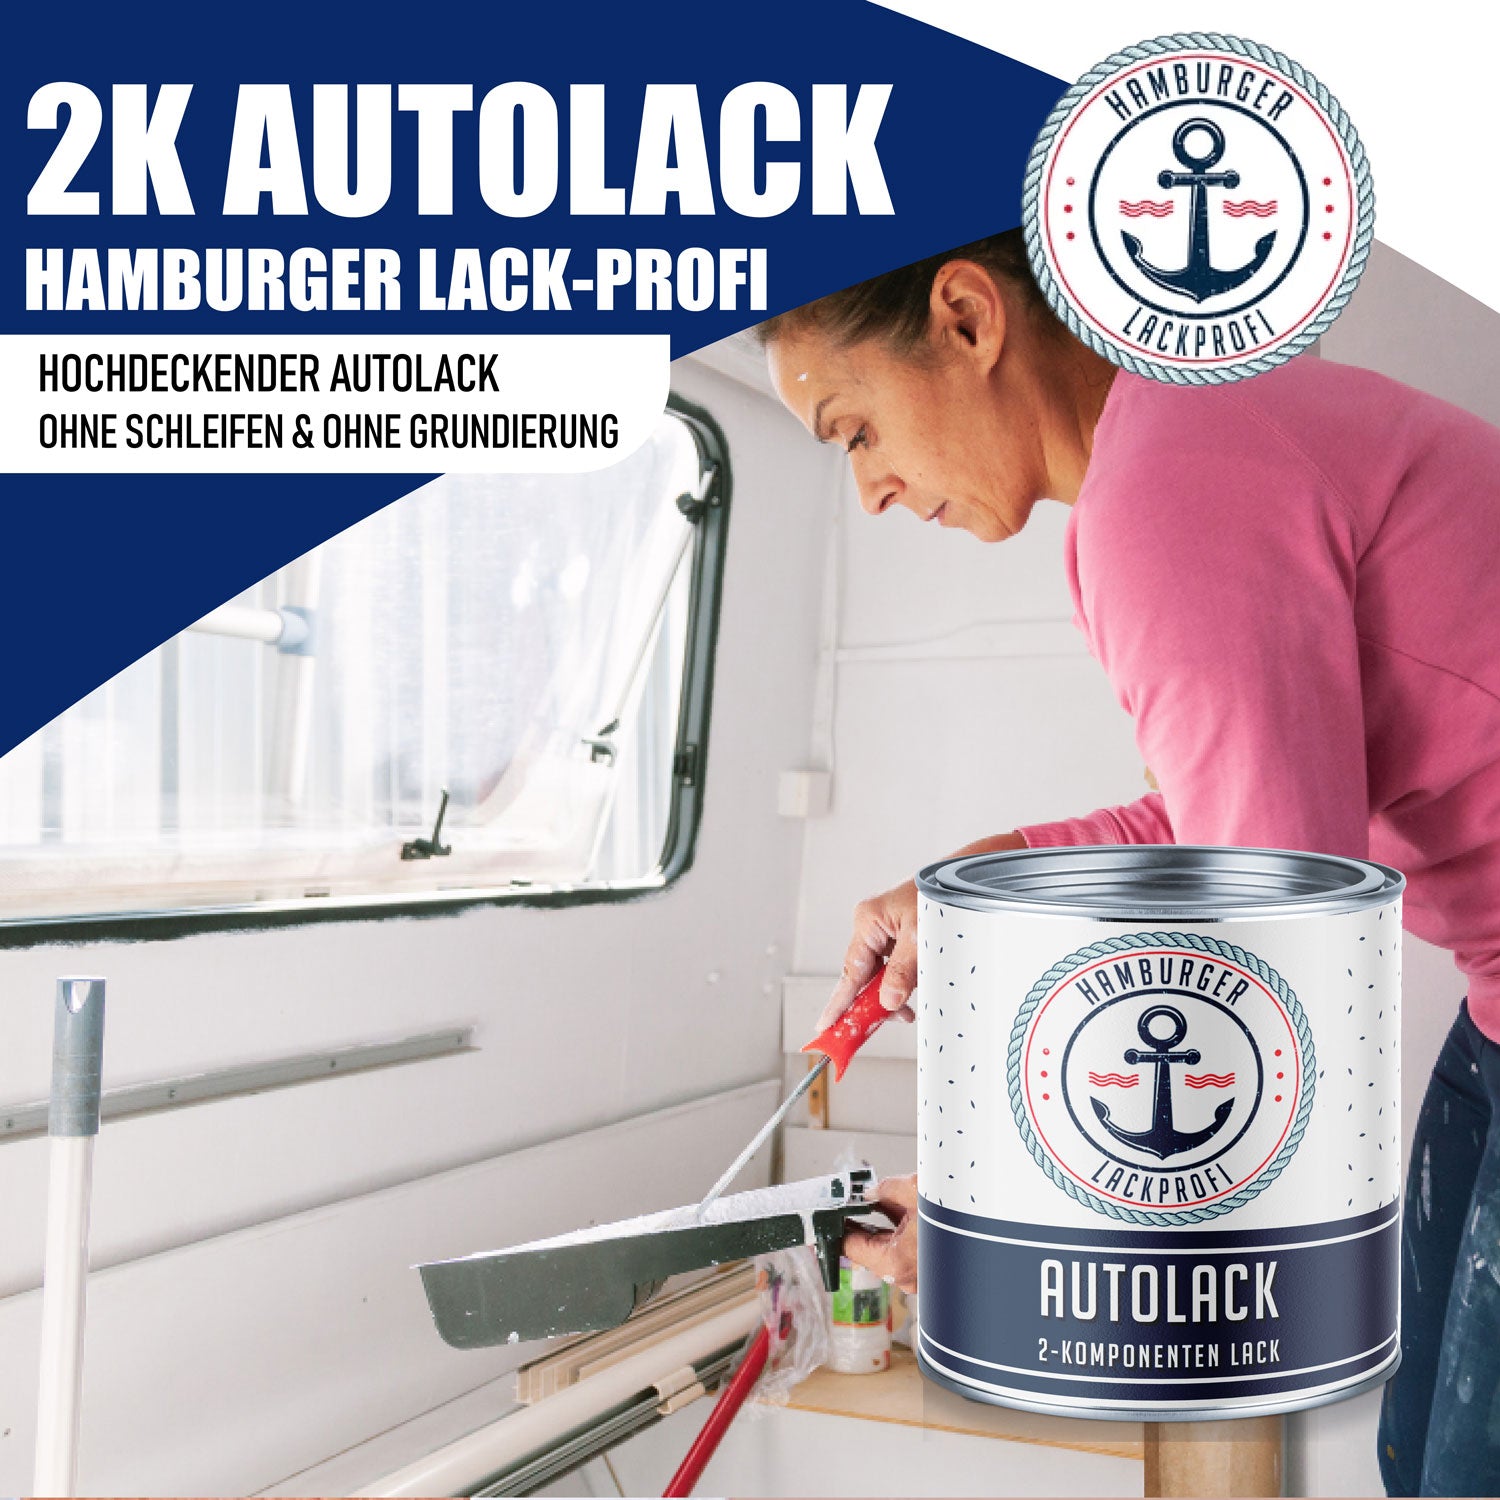 Hamburger Lack-Profi 2K Autolack in Moosgrau RAL 7003 mit Lackierset (X300) & Verdünnung (1 L) - 30% Sparangebot